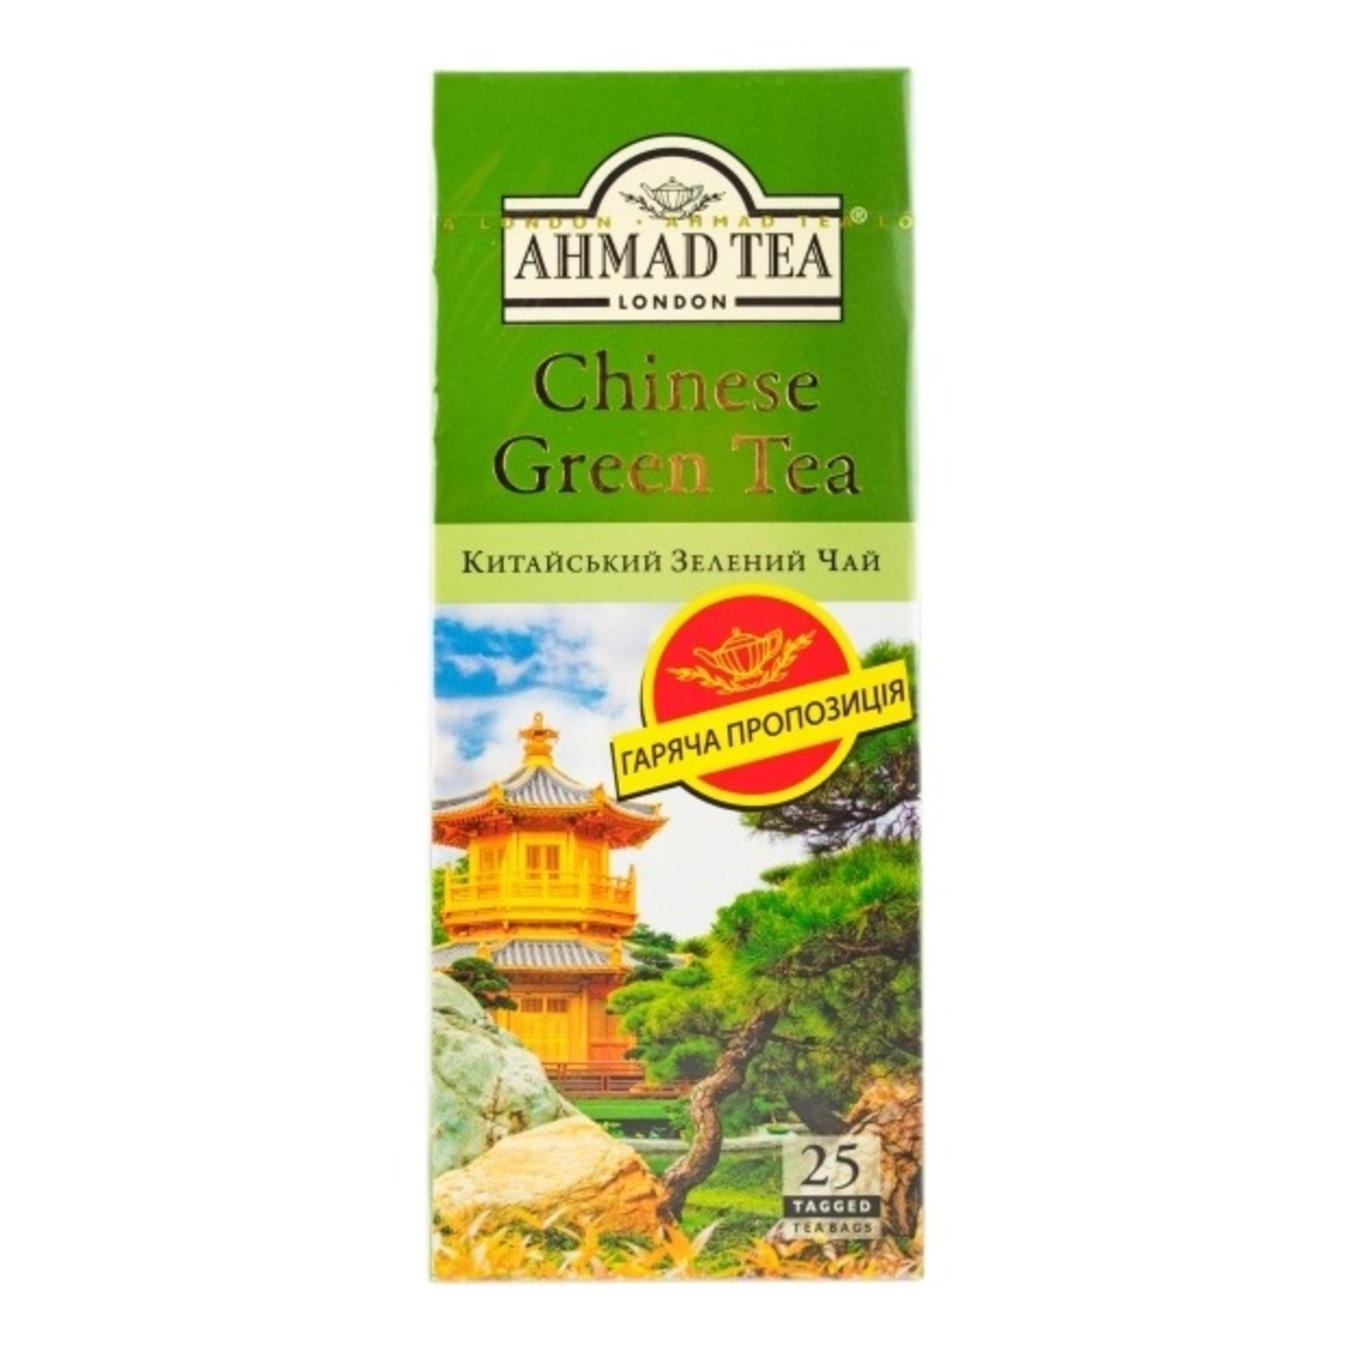 Ahmad Tea Chinese Green Tea 1,8g 25pcs